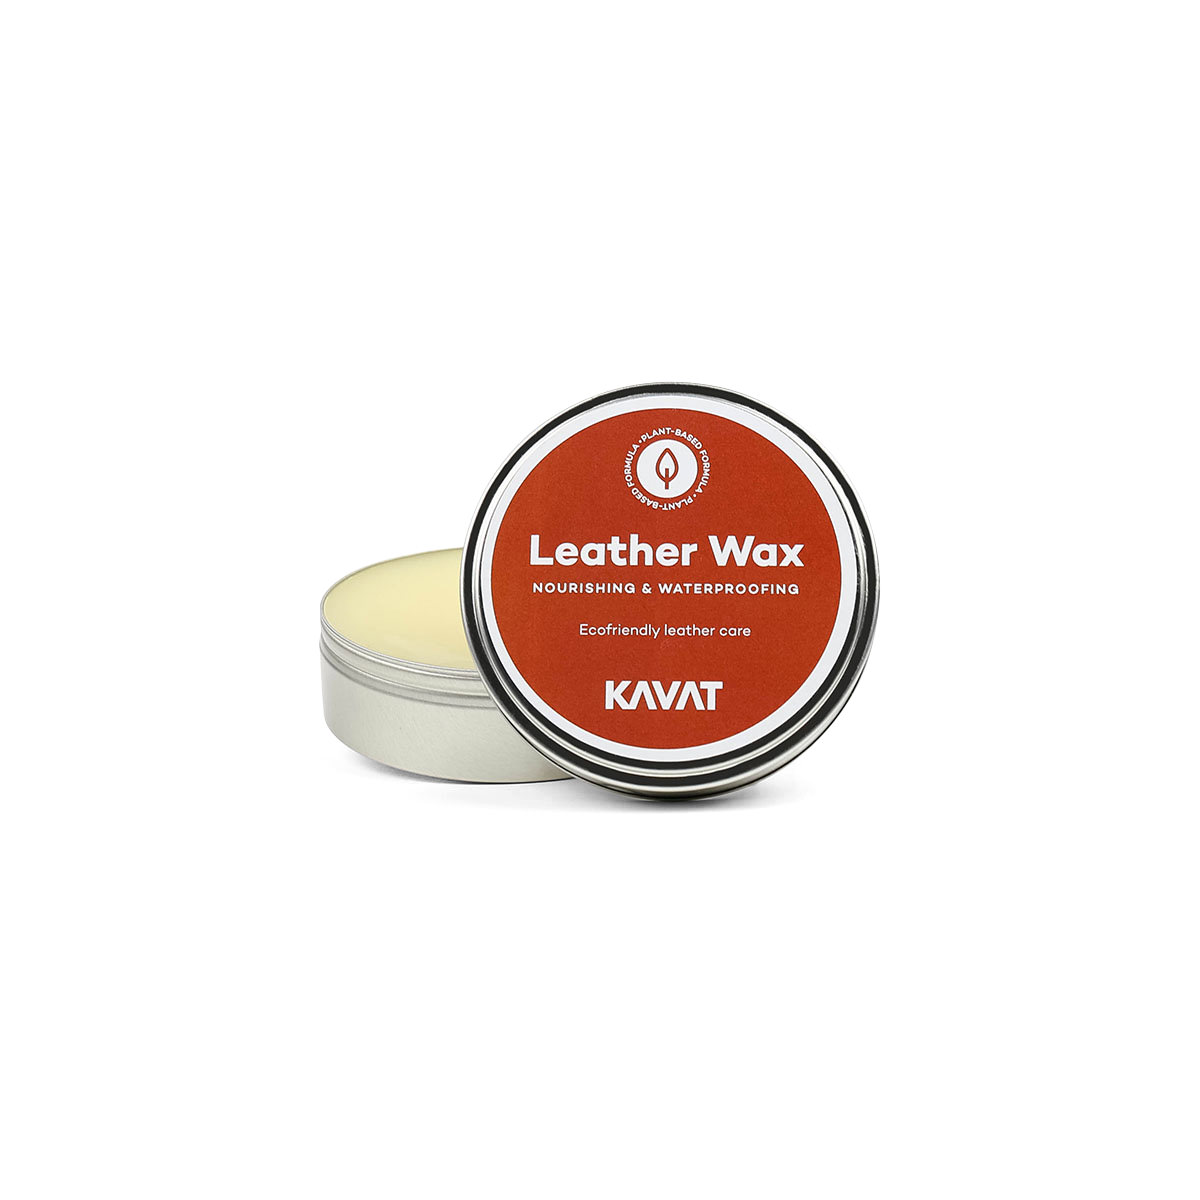 Leather Waxproduktzoombild #1